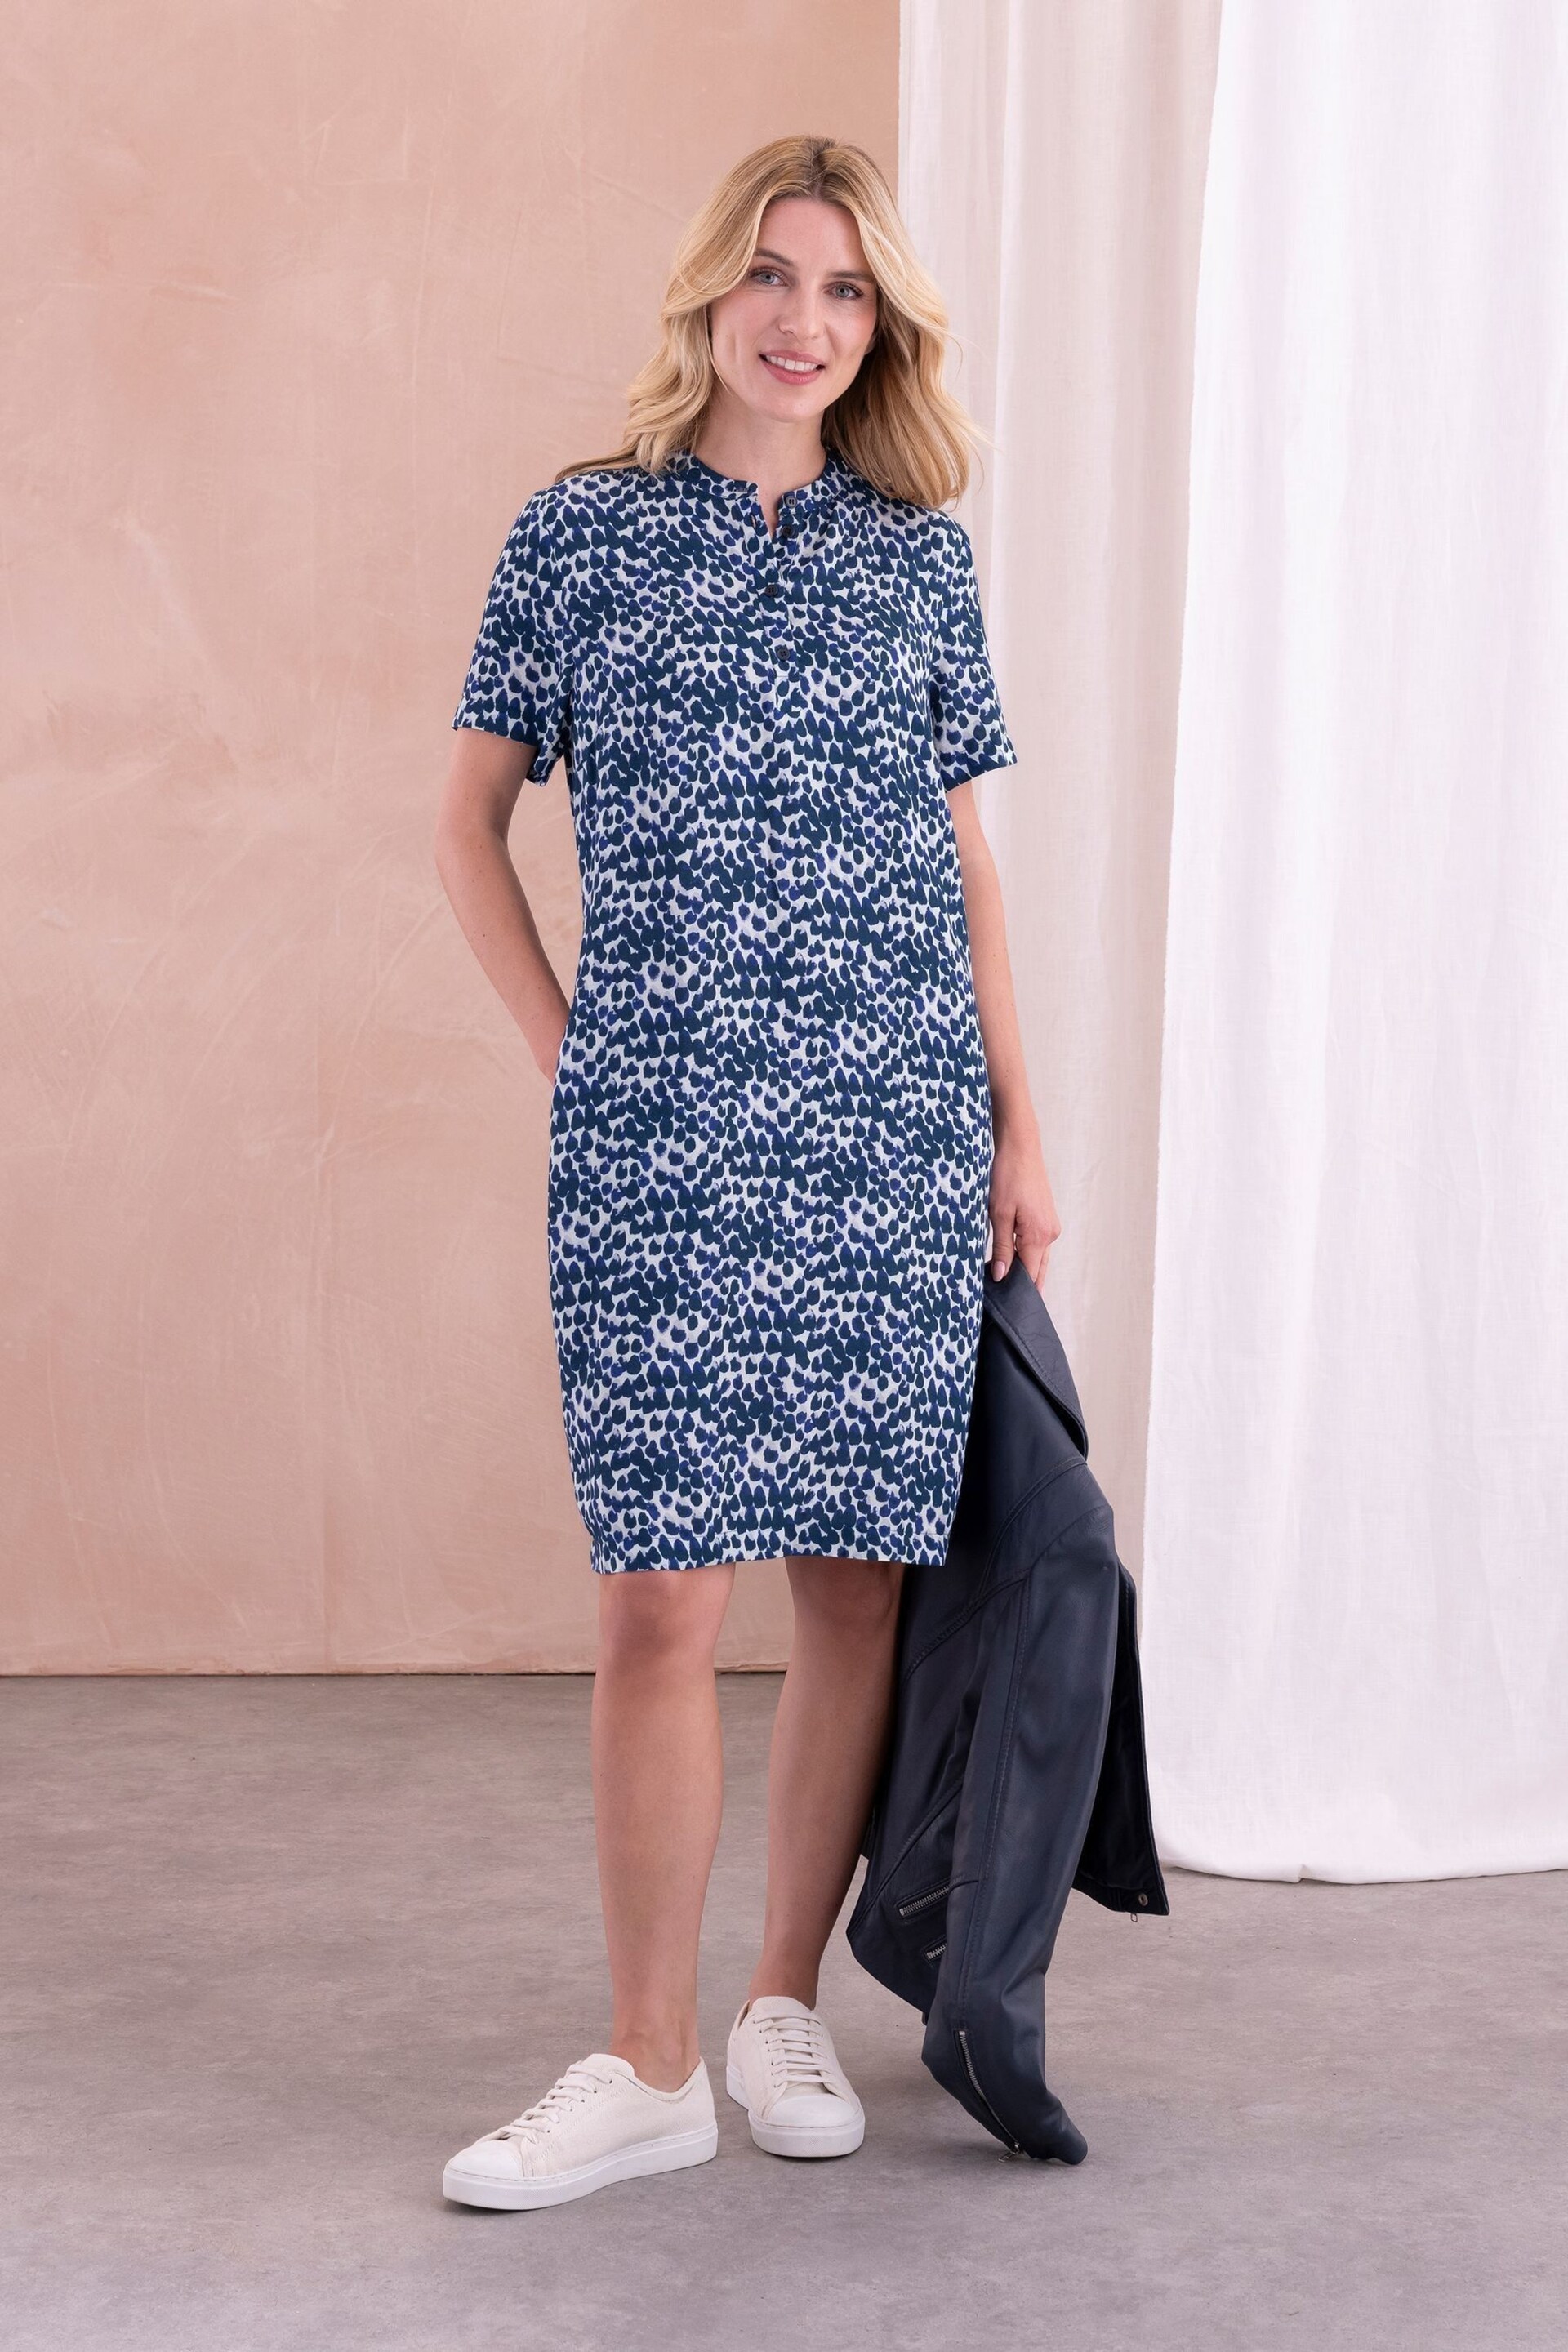 Celtic & Co. Blue Short Sleeve Knee Length Shift Dress - Image 2 of 5